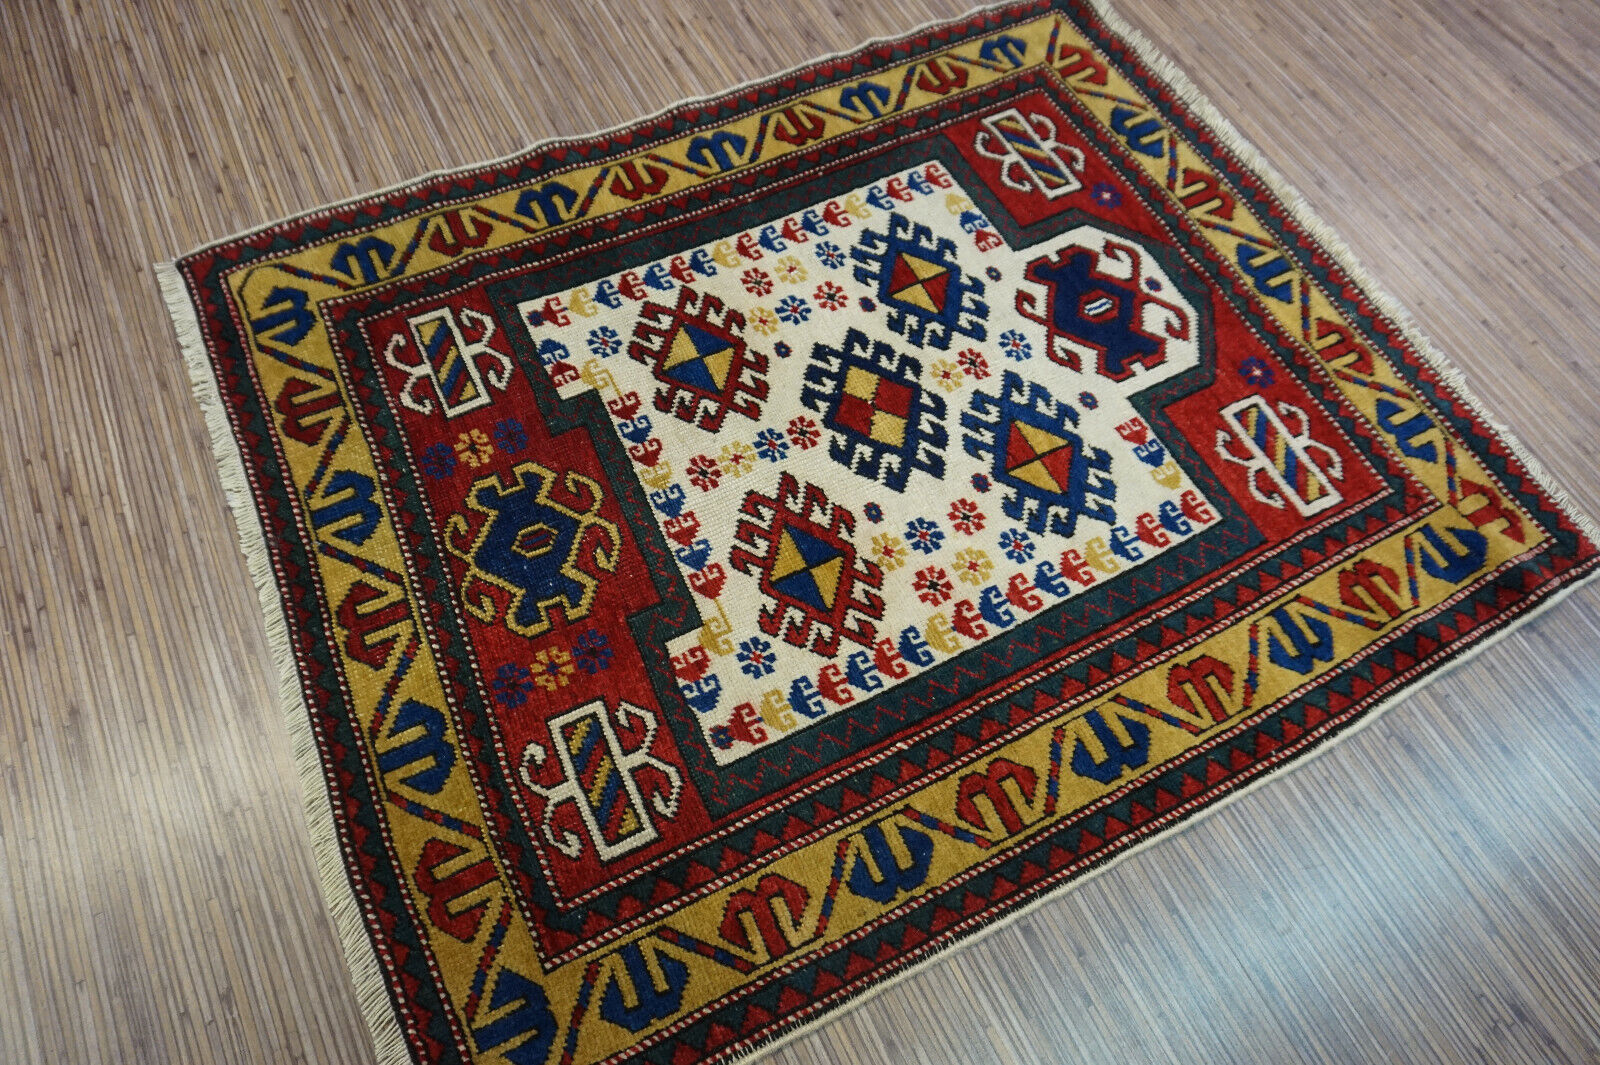 Angled shot of the Handmade Antique Caucasian Kazak Prayer Rug complementing interior decor